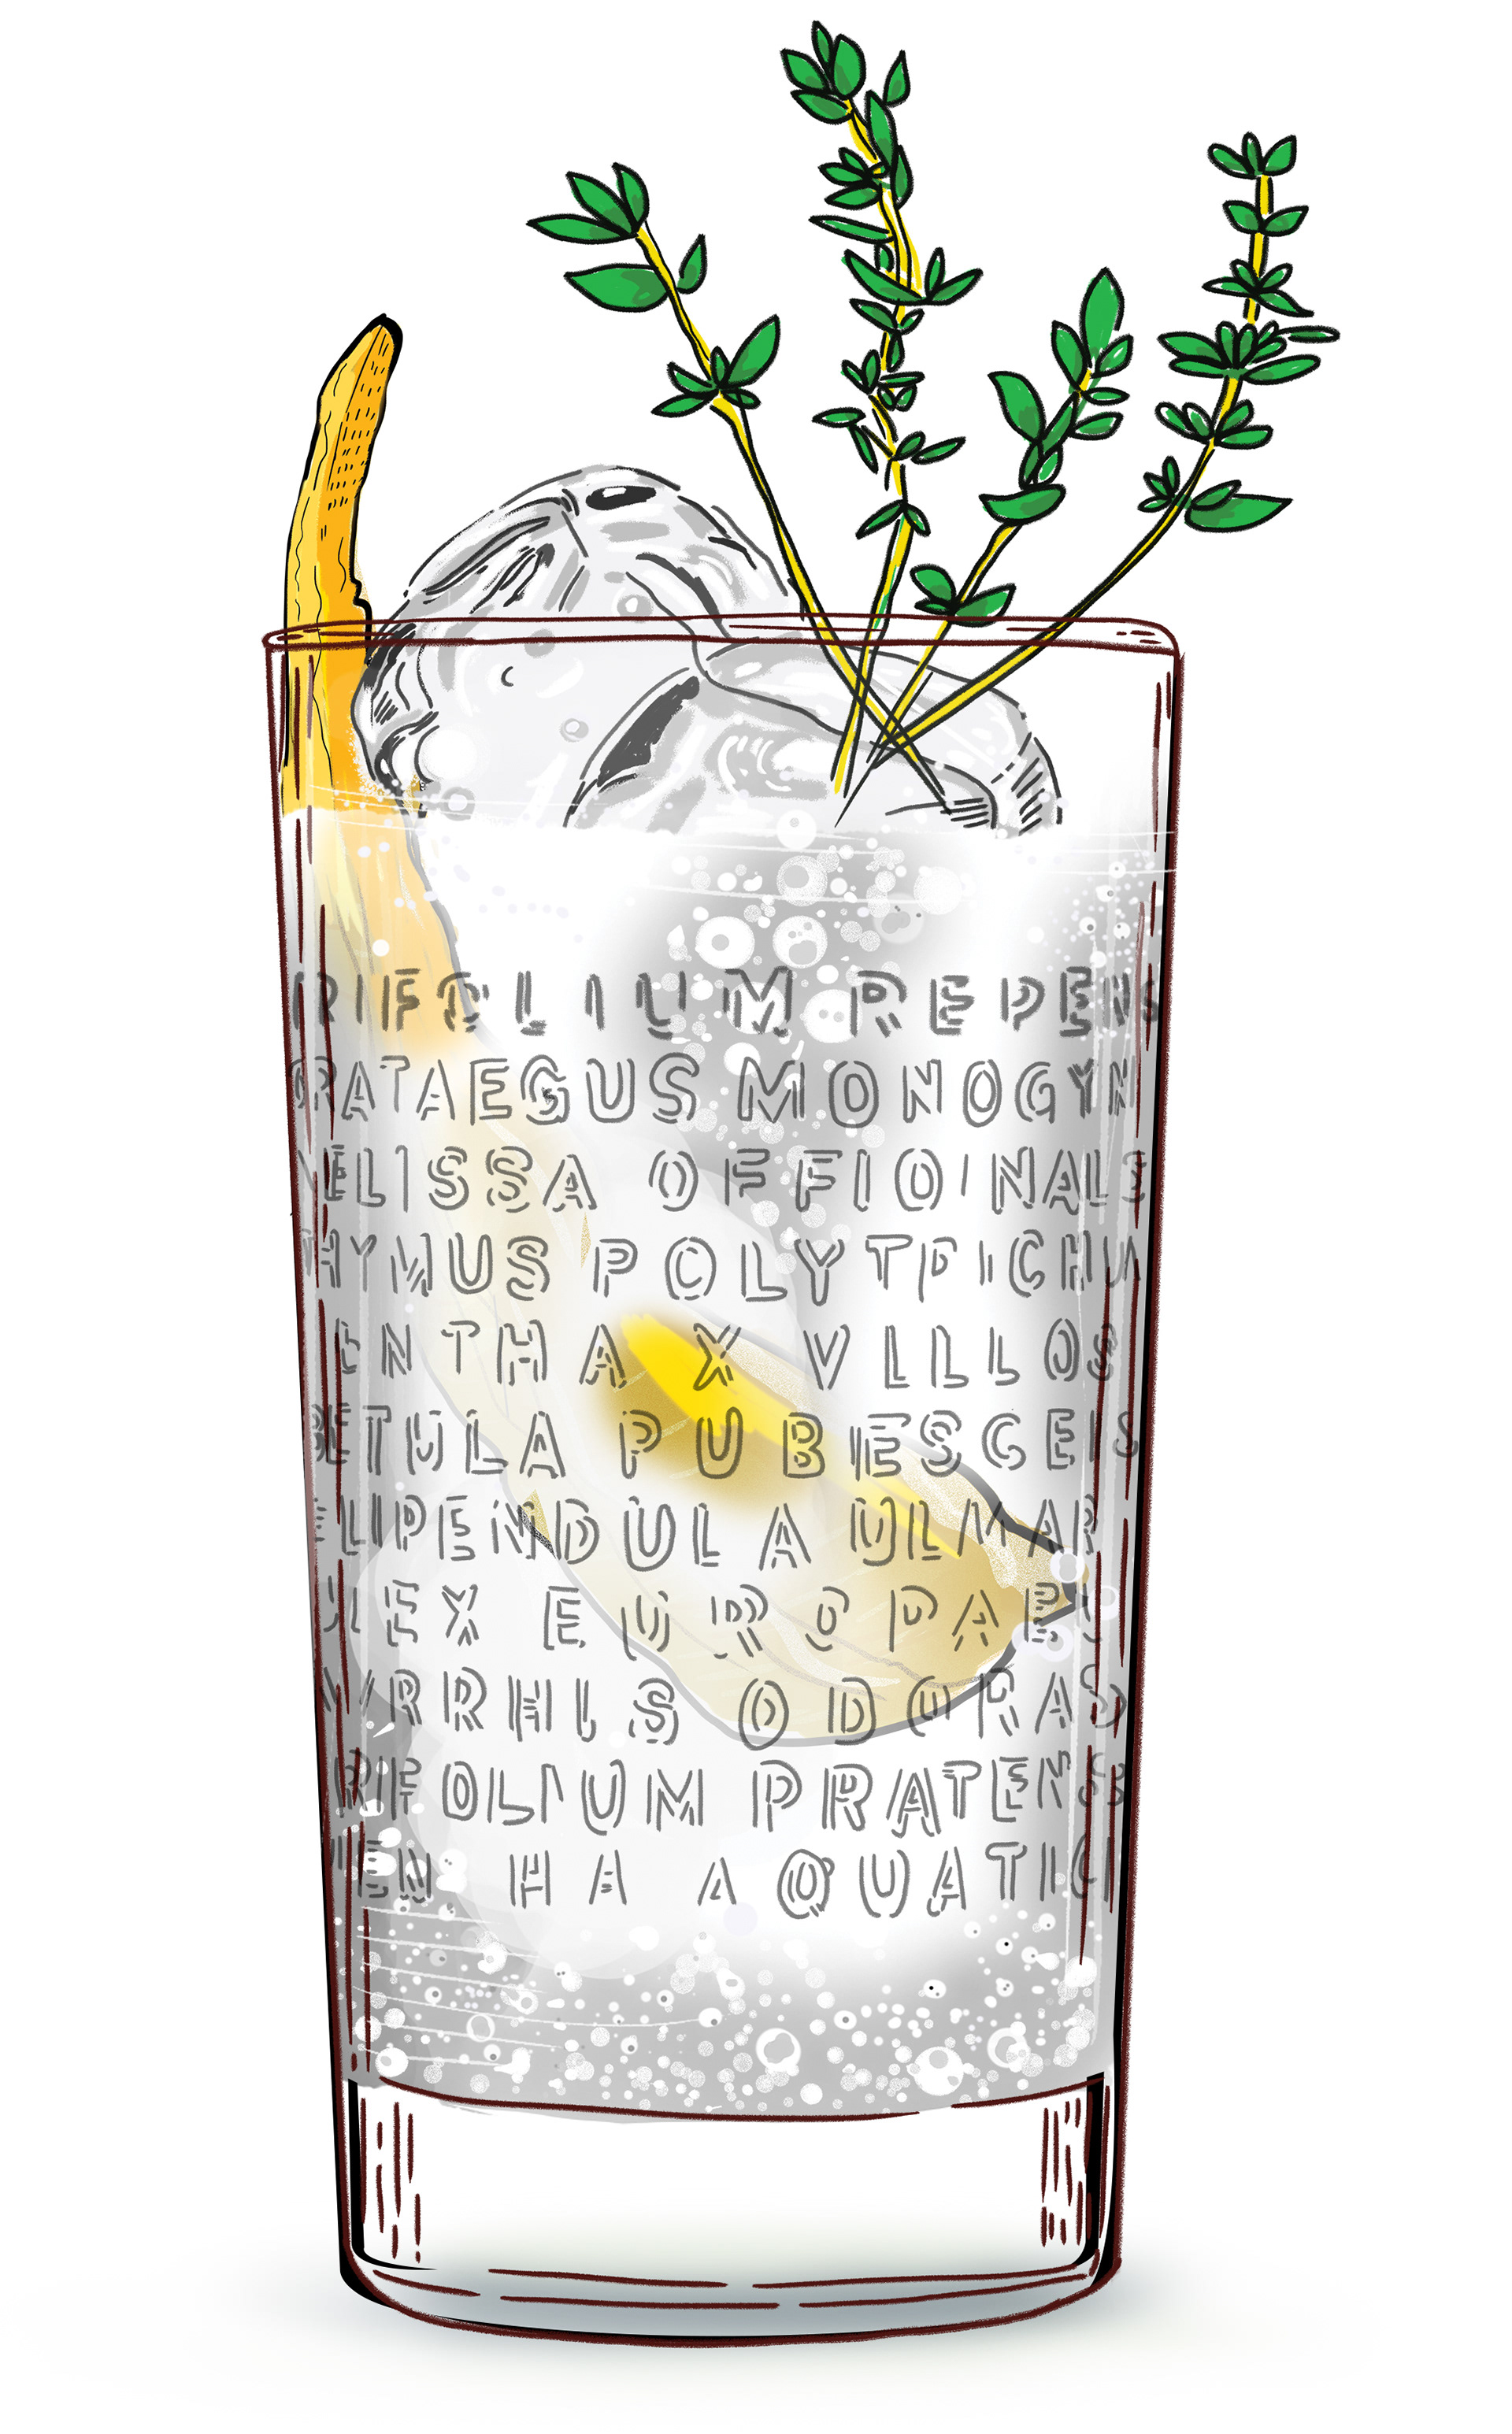 The Botanist Highball Glass